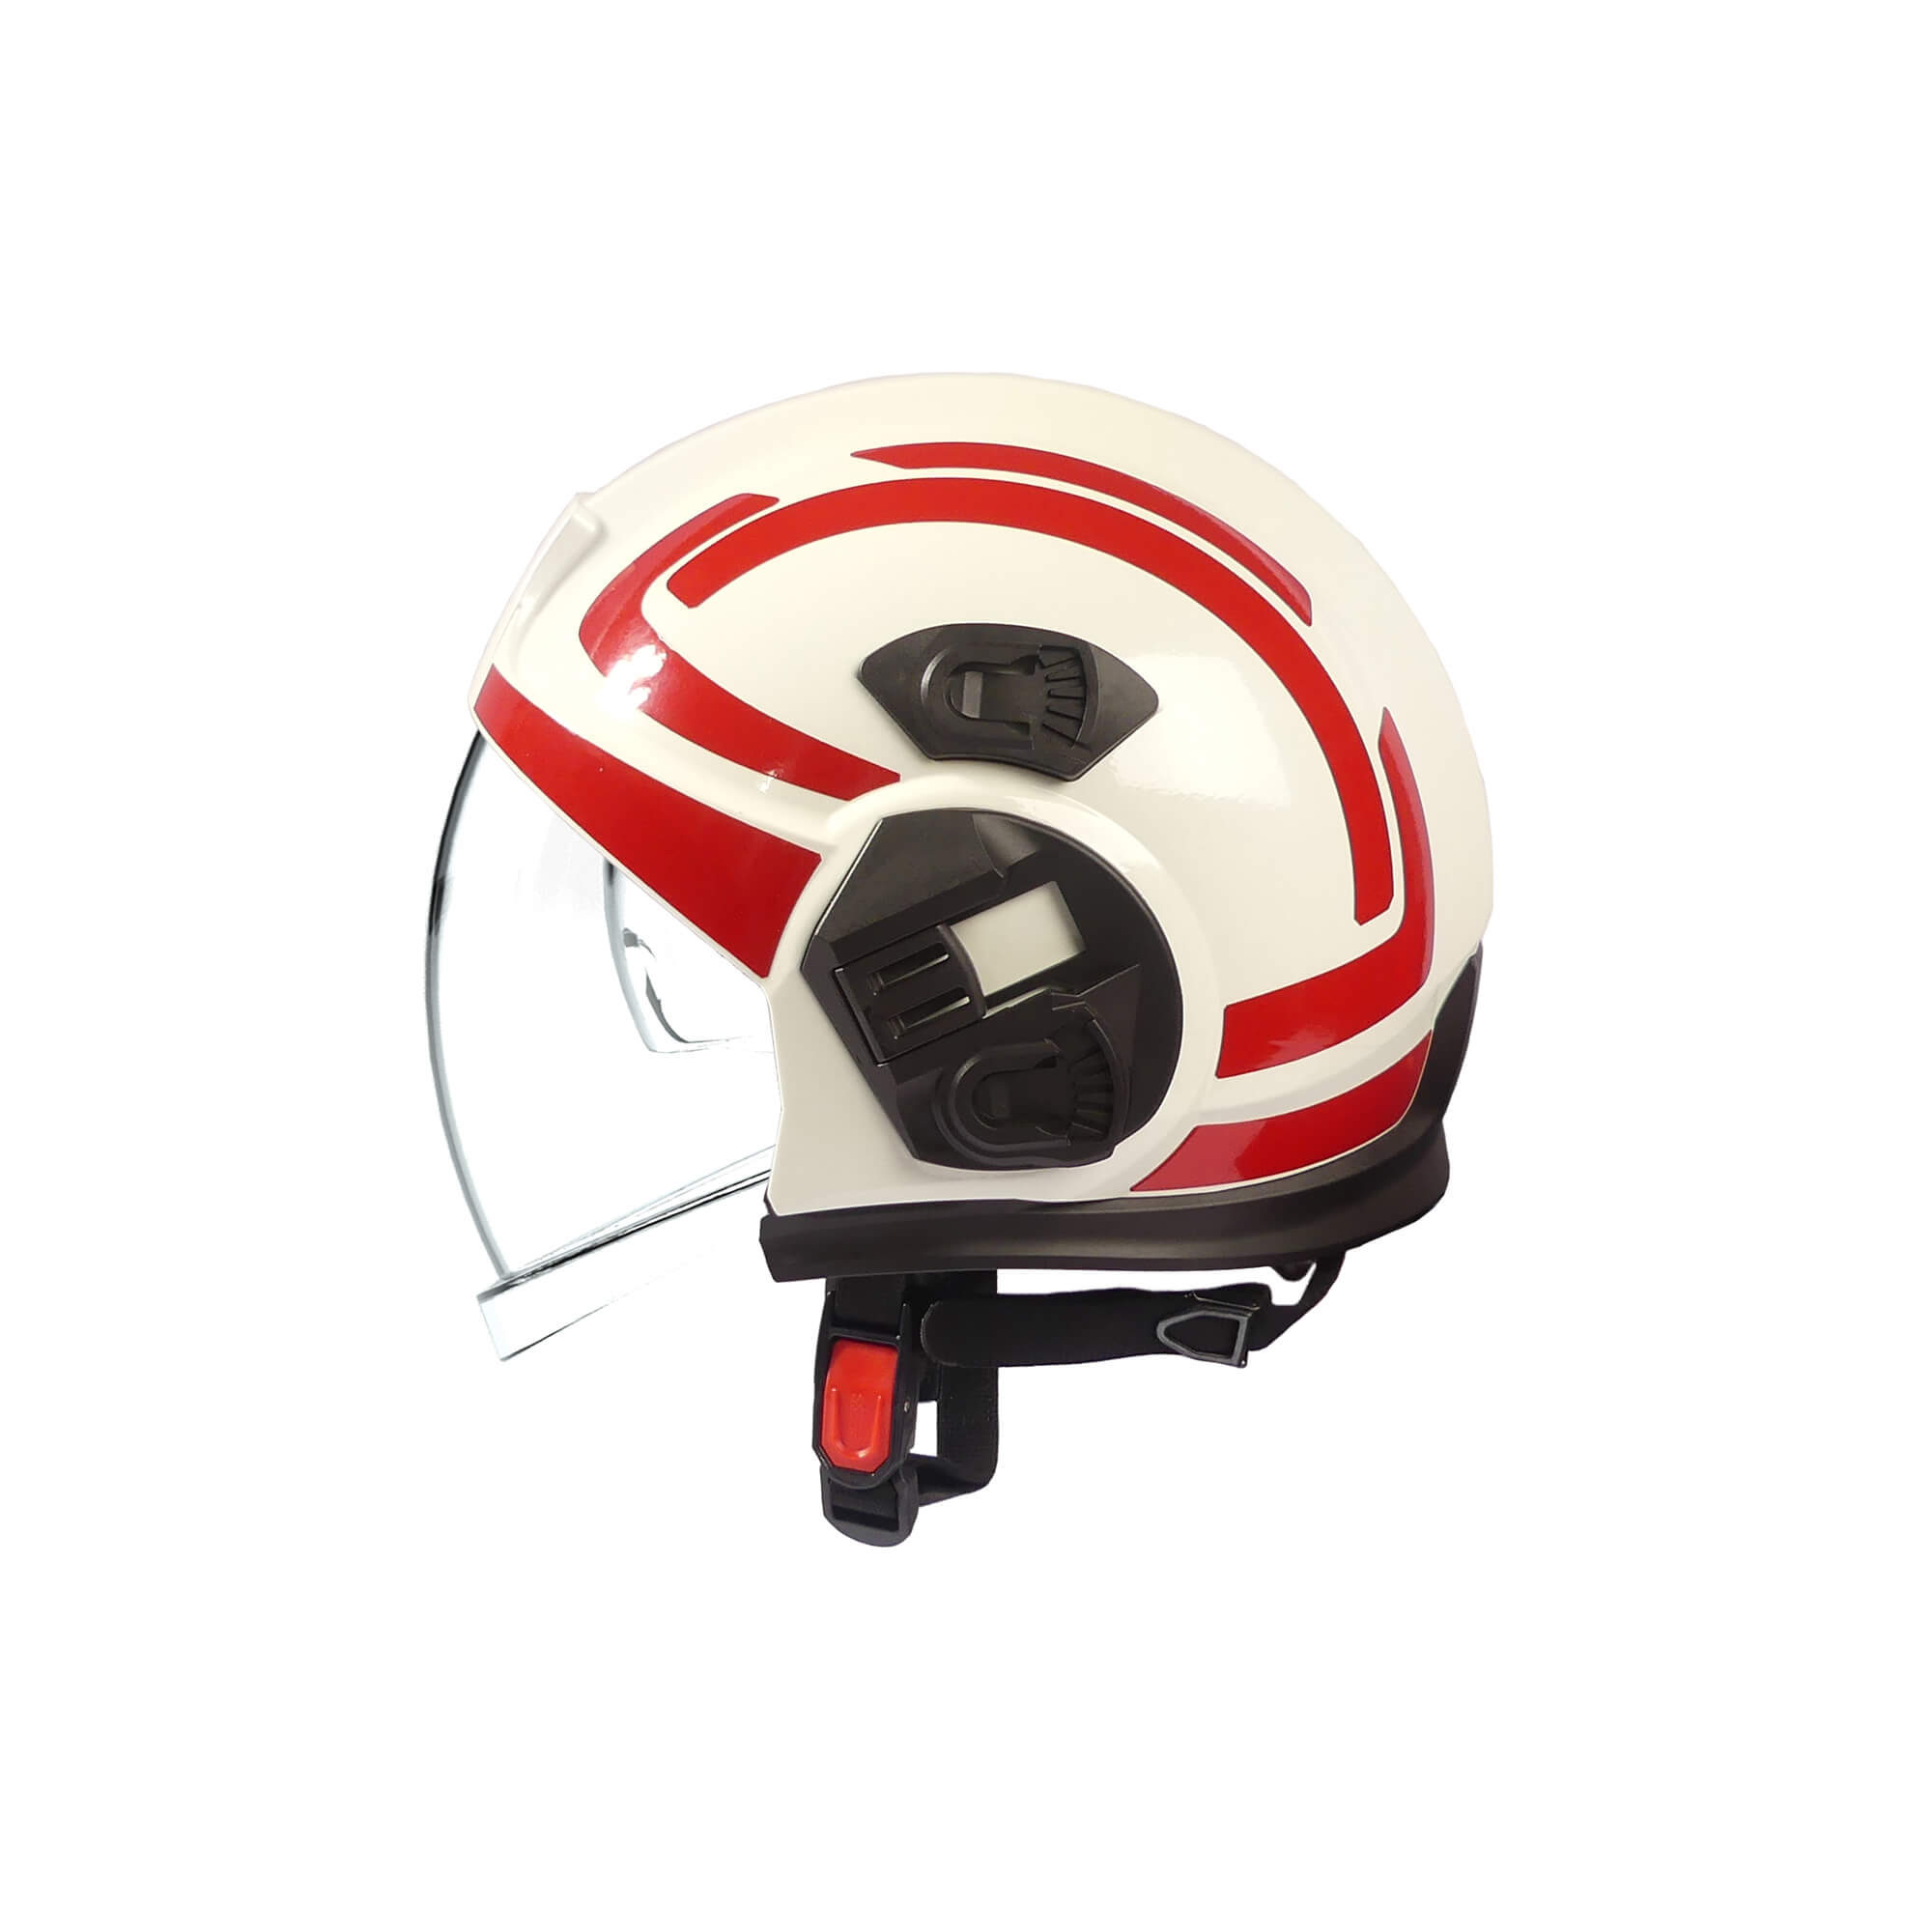 Helmet for firefighting interventions PAB Fire 05, Lumino RR